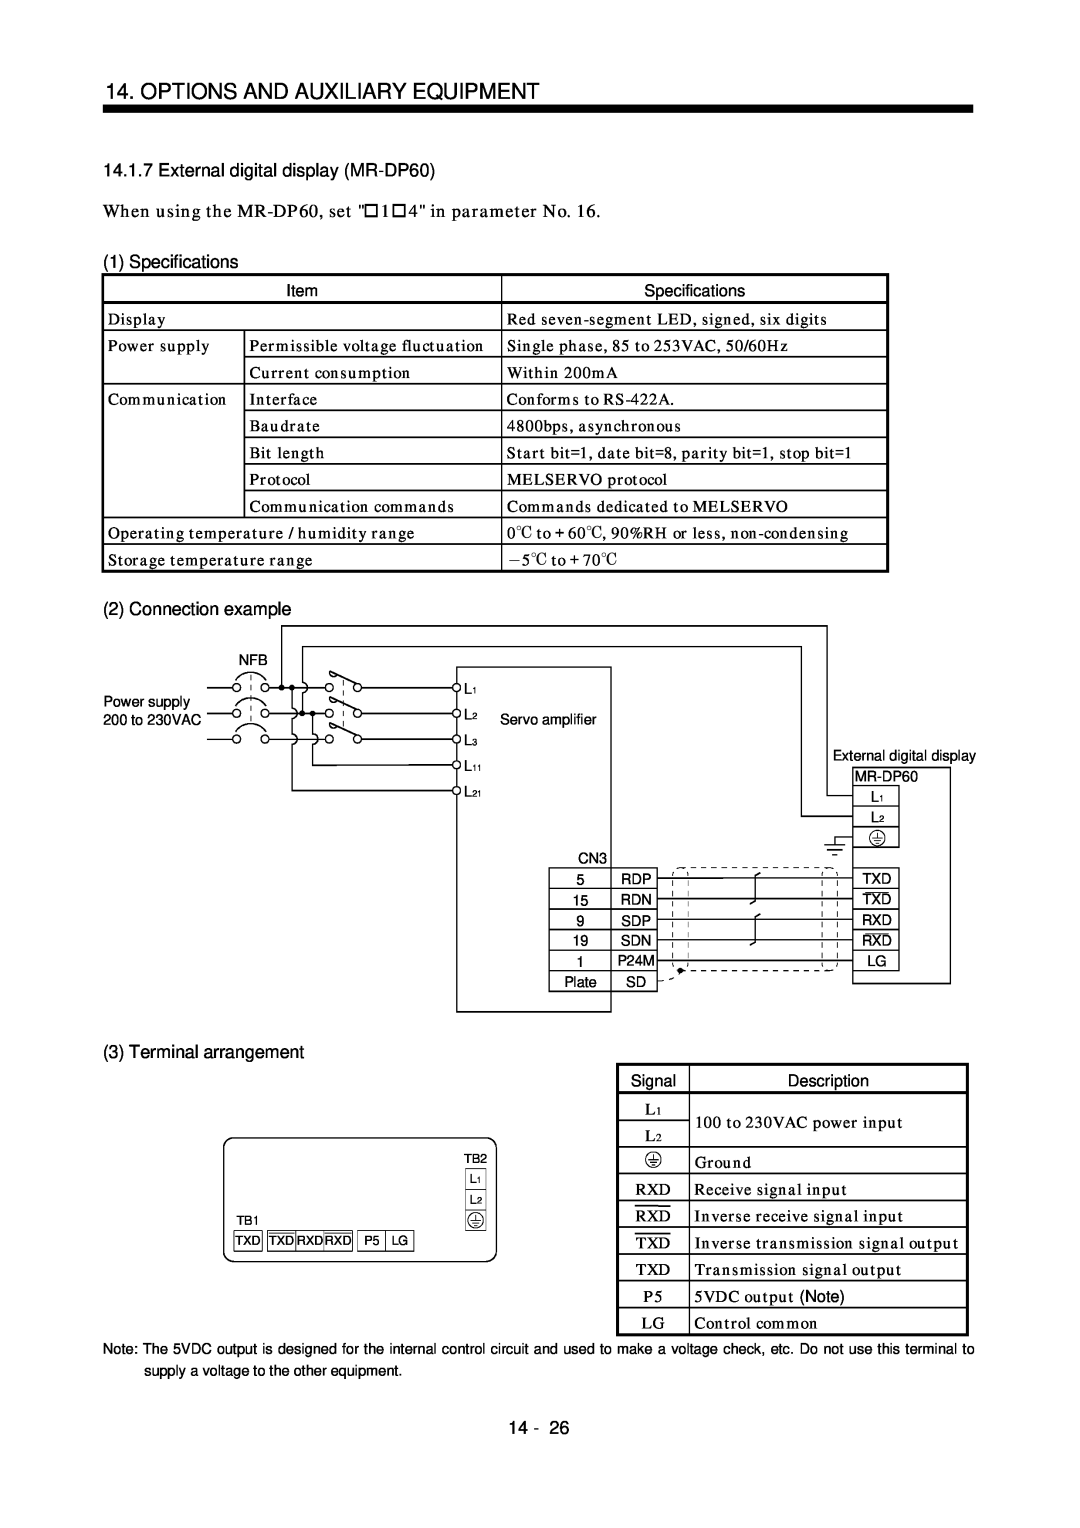 Mitsubishi Electronics MR-J2S- CL specifications External digital display MR-DP60, Specifications, Terminal arrangement, 14 